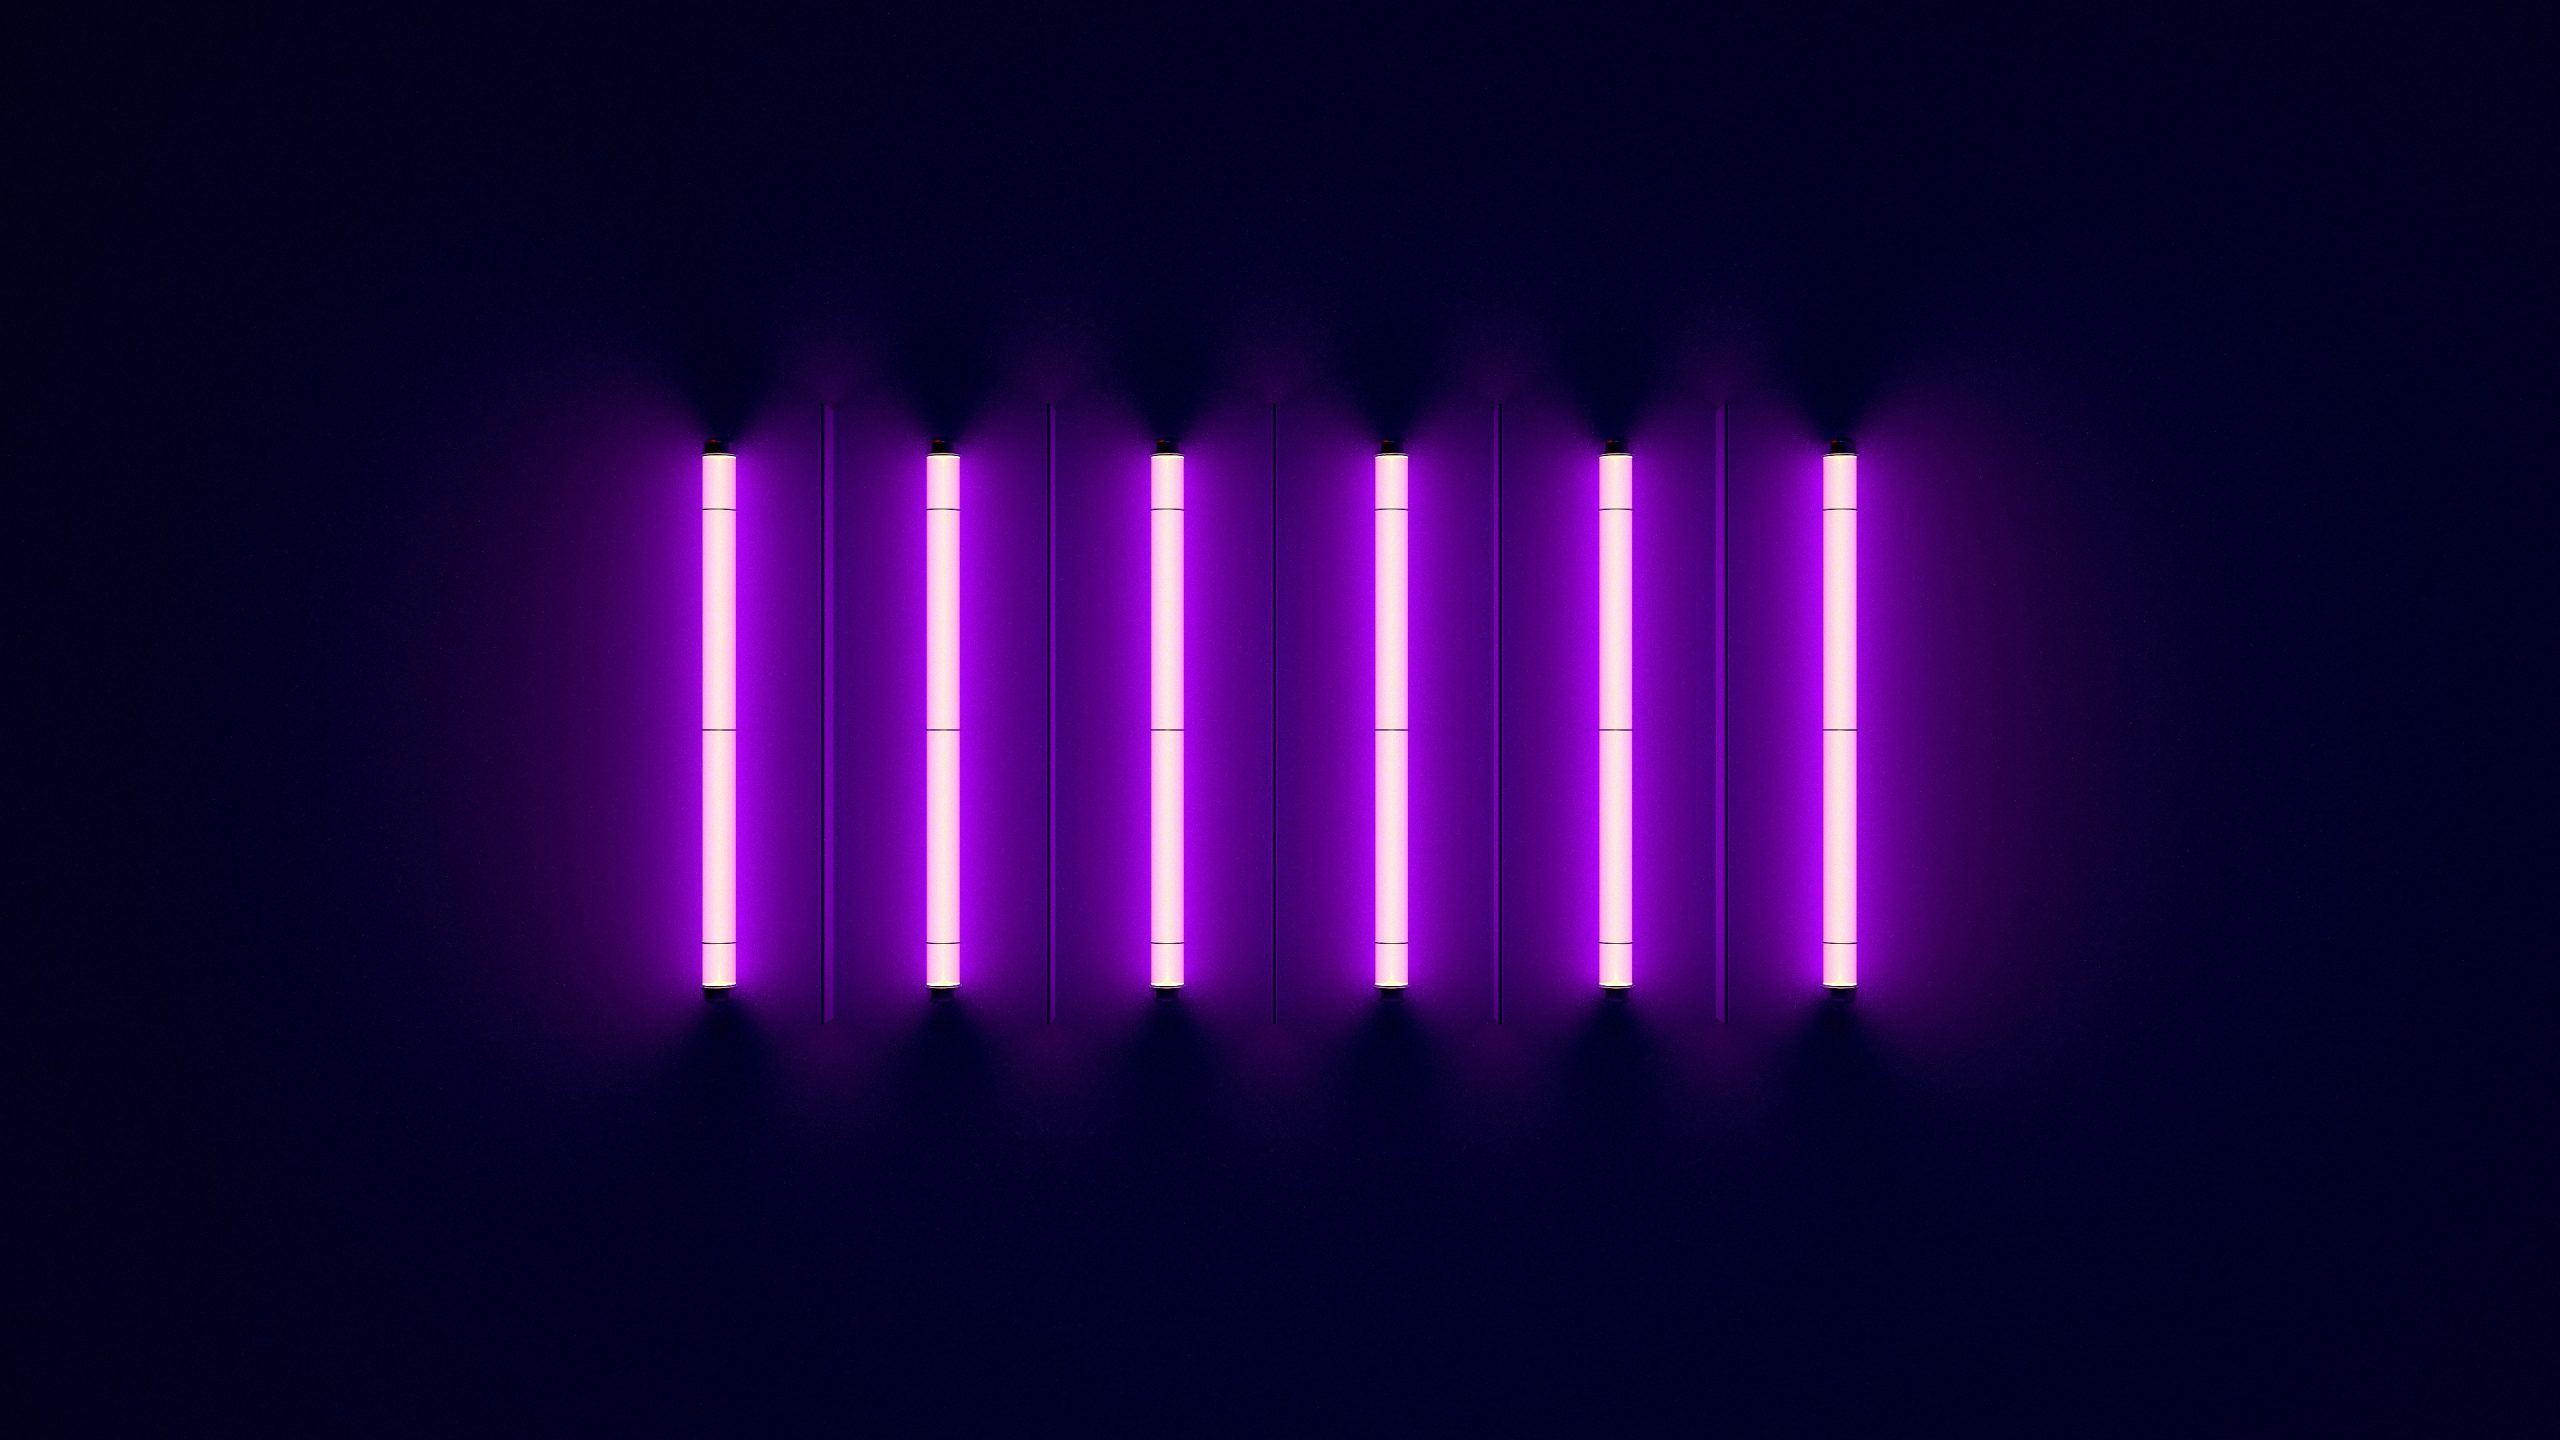 vibey purple led lights  Purple led lights Instagram inspiration posts Led  lights